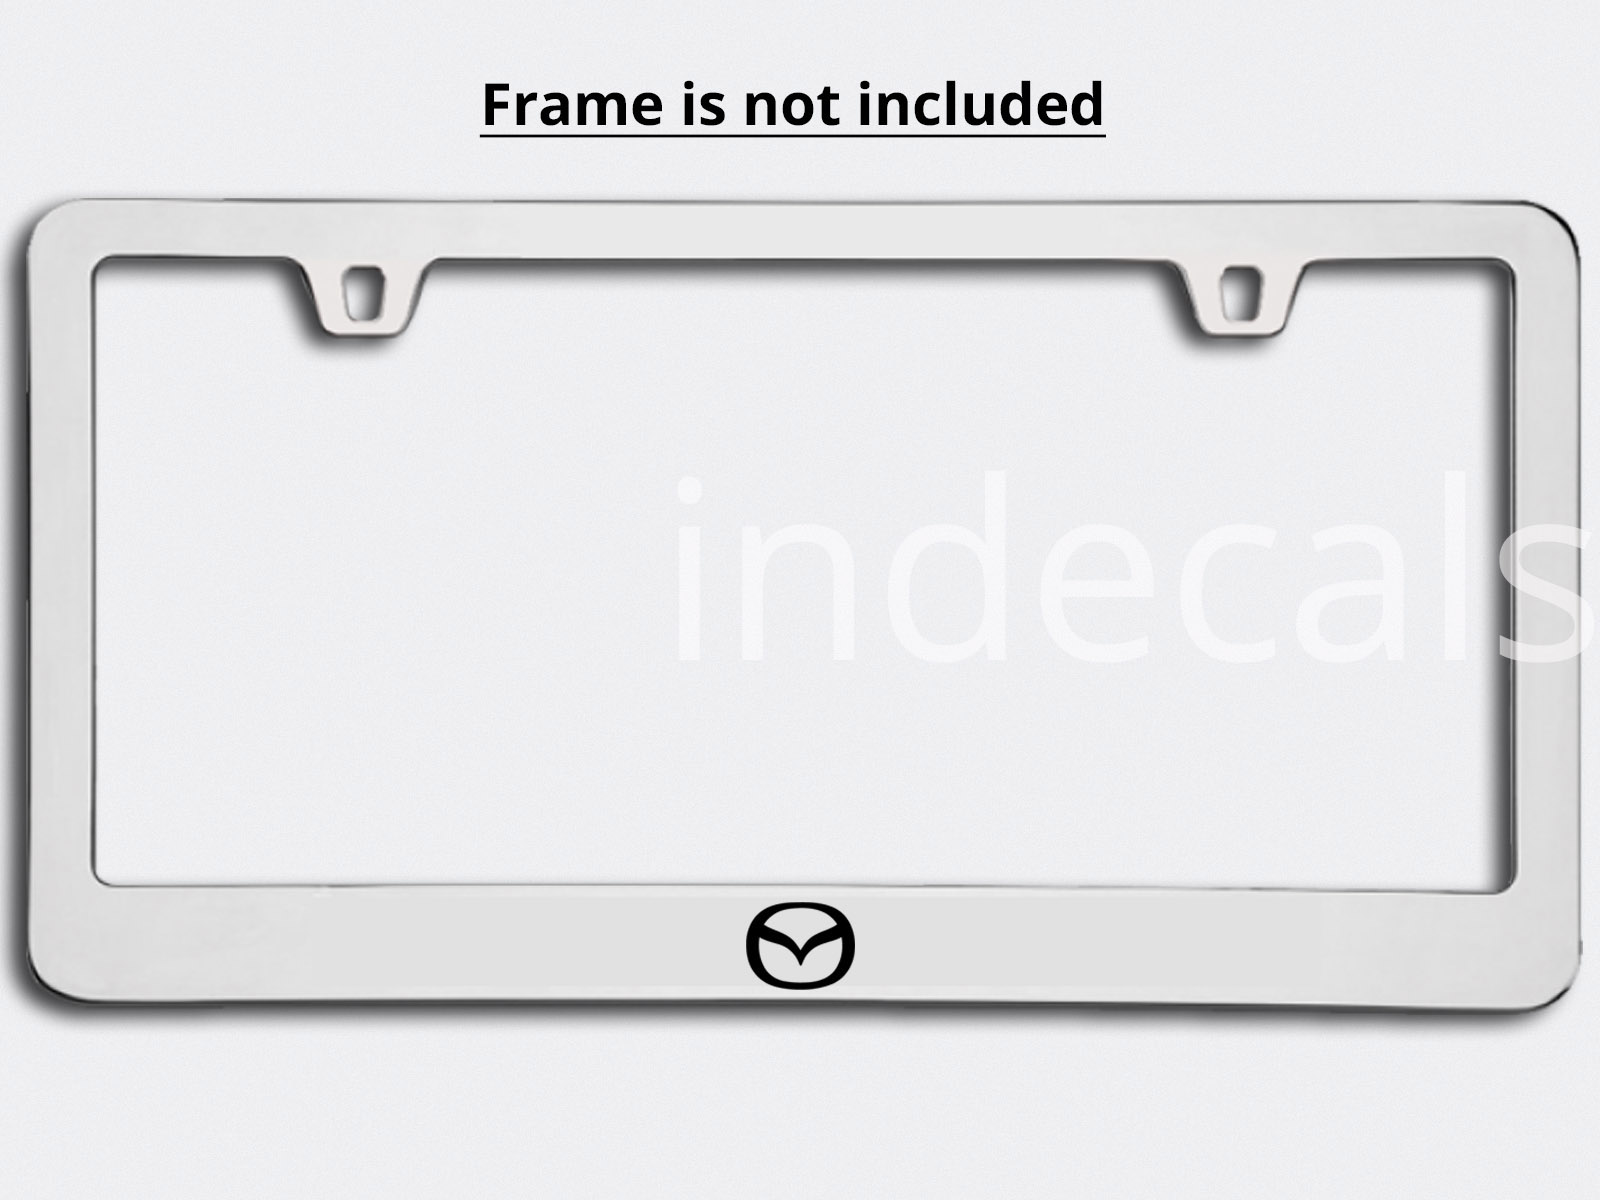 3 x Mazda Stickers for License Plate Frame - Black